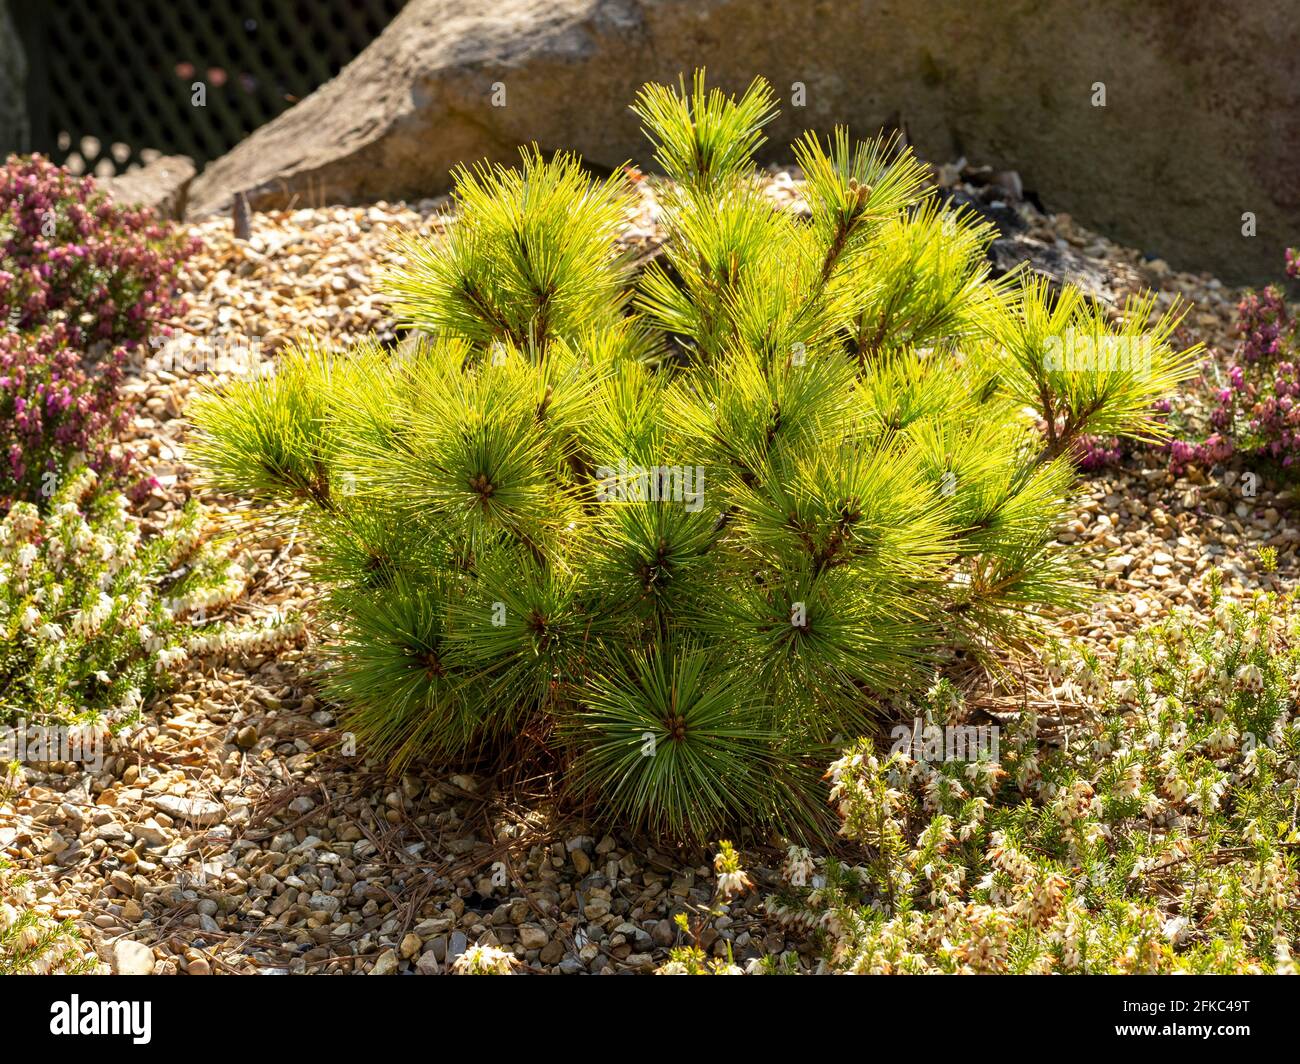 Pino enano Pinus strobus Radiata en un jardín rocoso Foto de stock